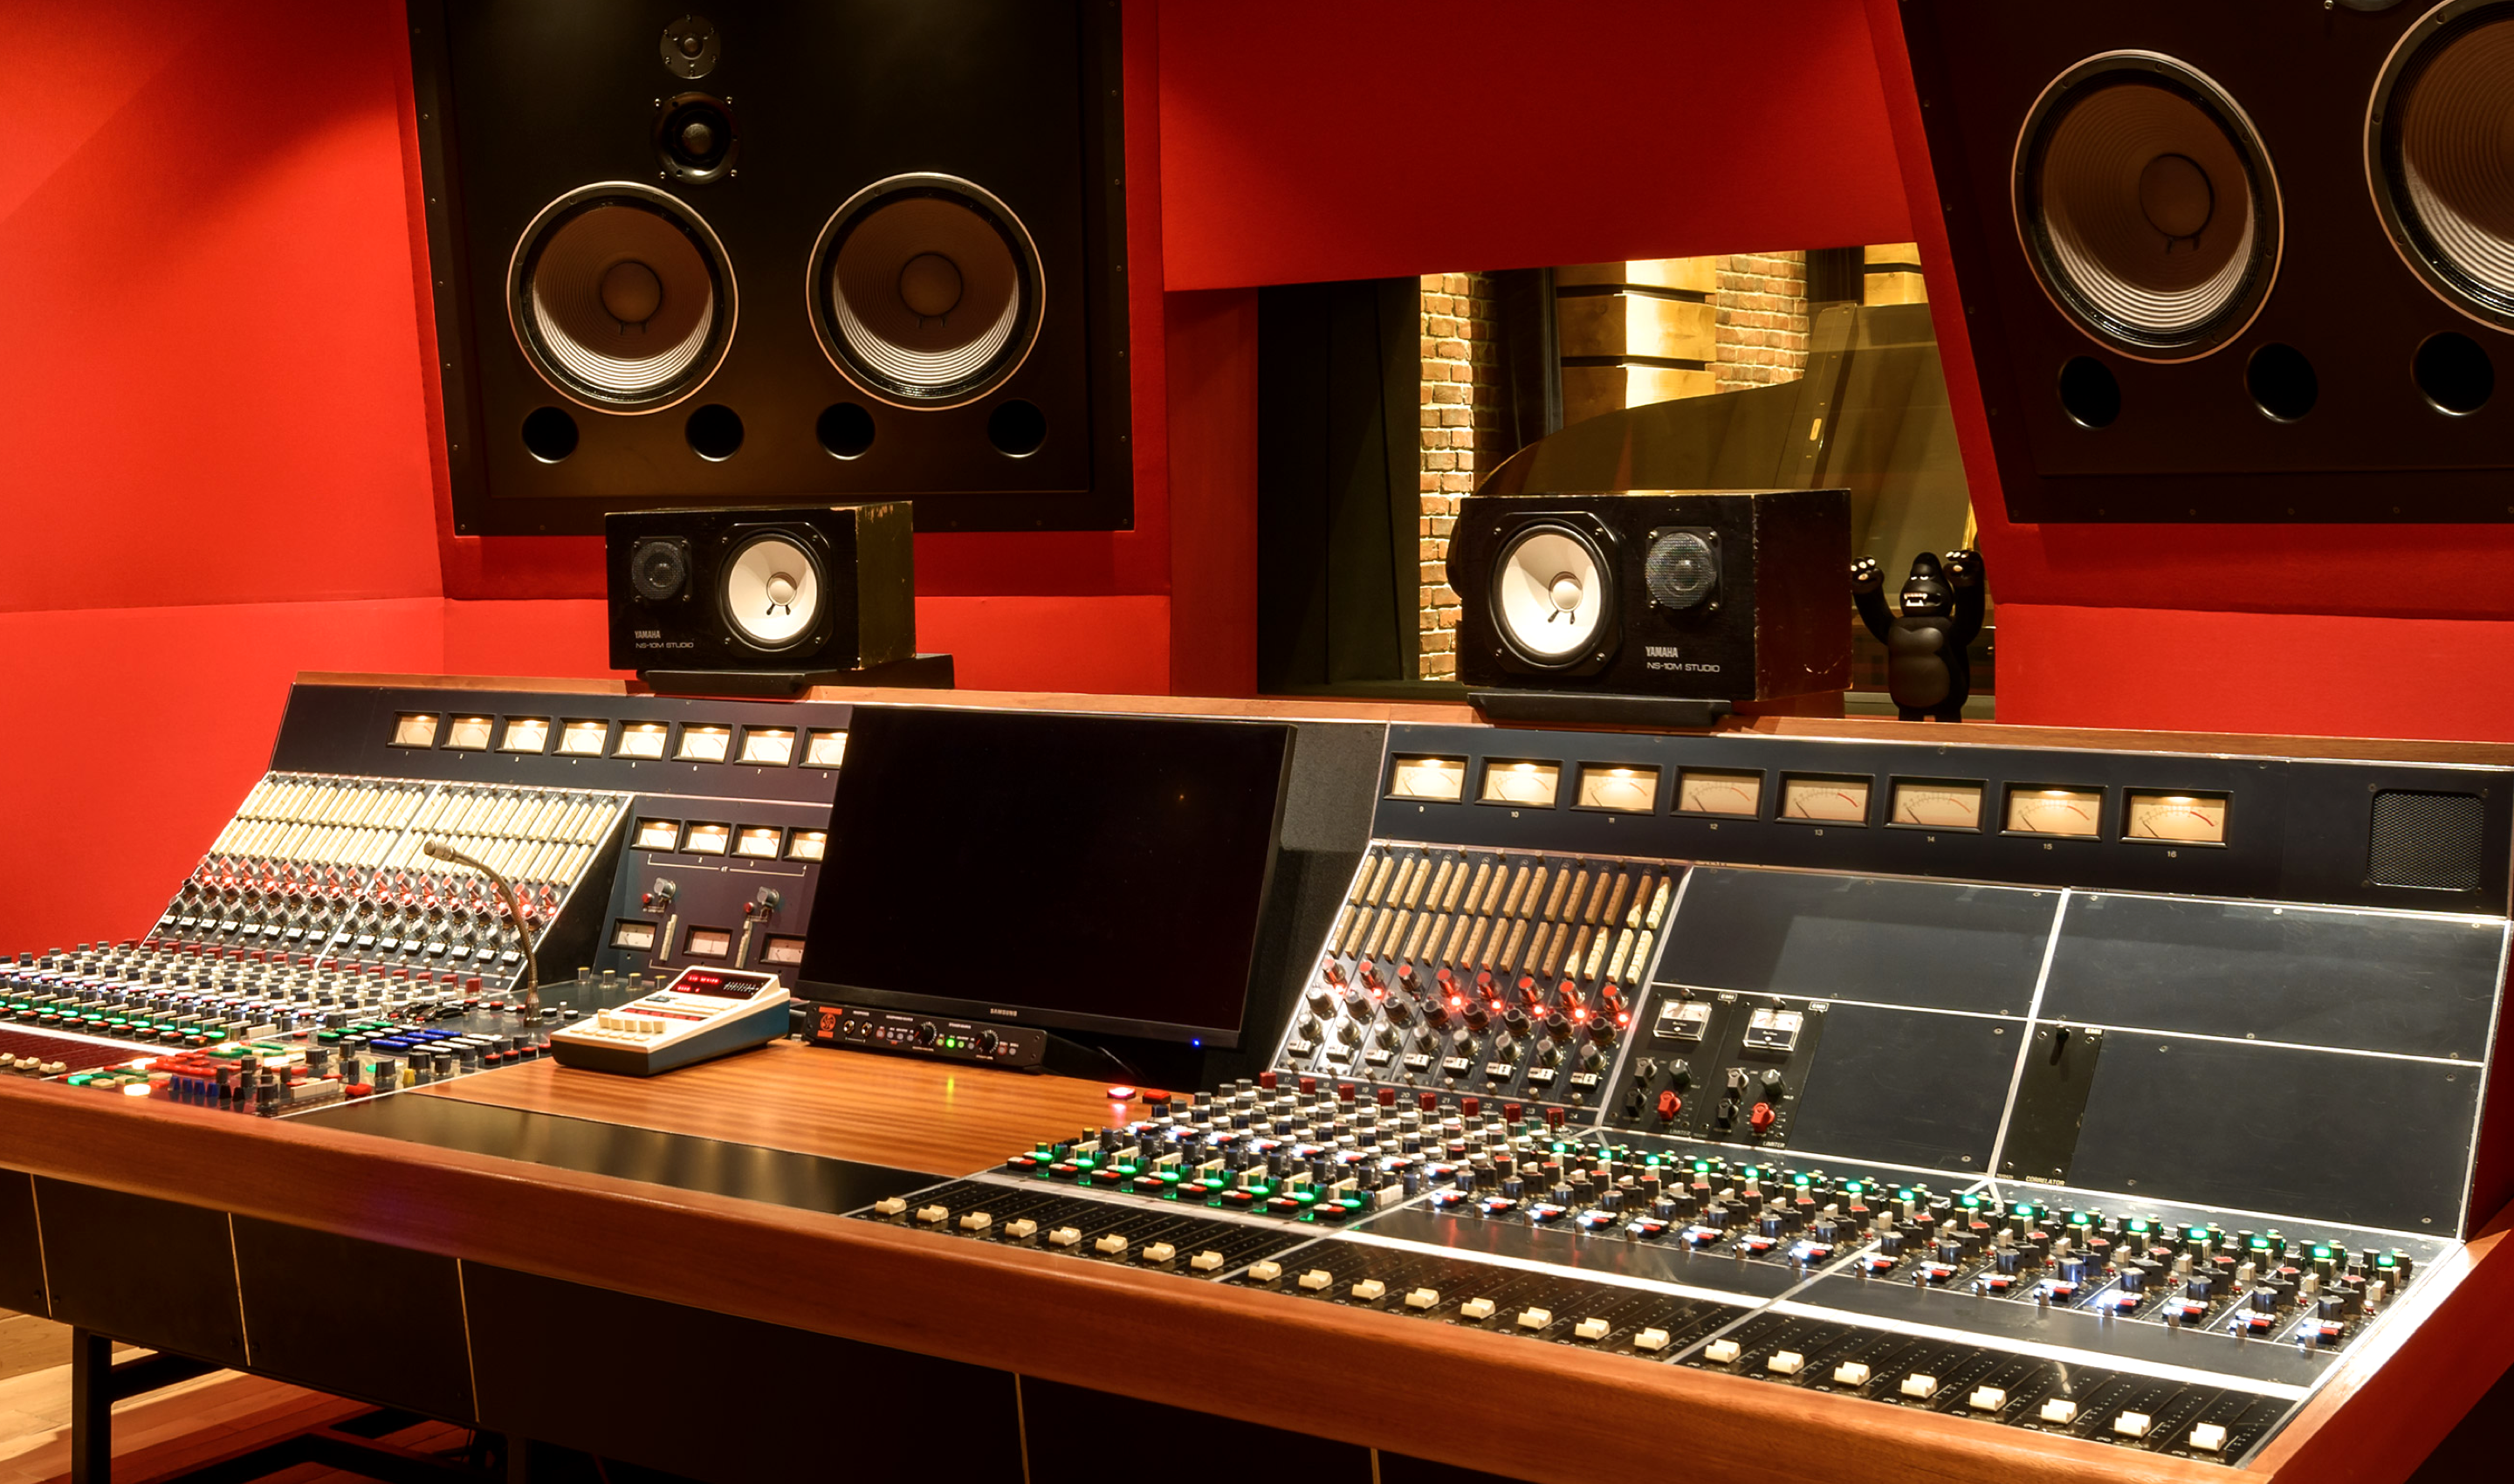 QDS Accueil - Recording Mixing and Atmos Studios in Paris. - QDS Studios